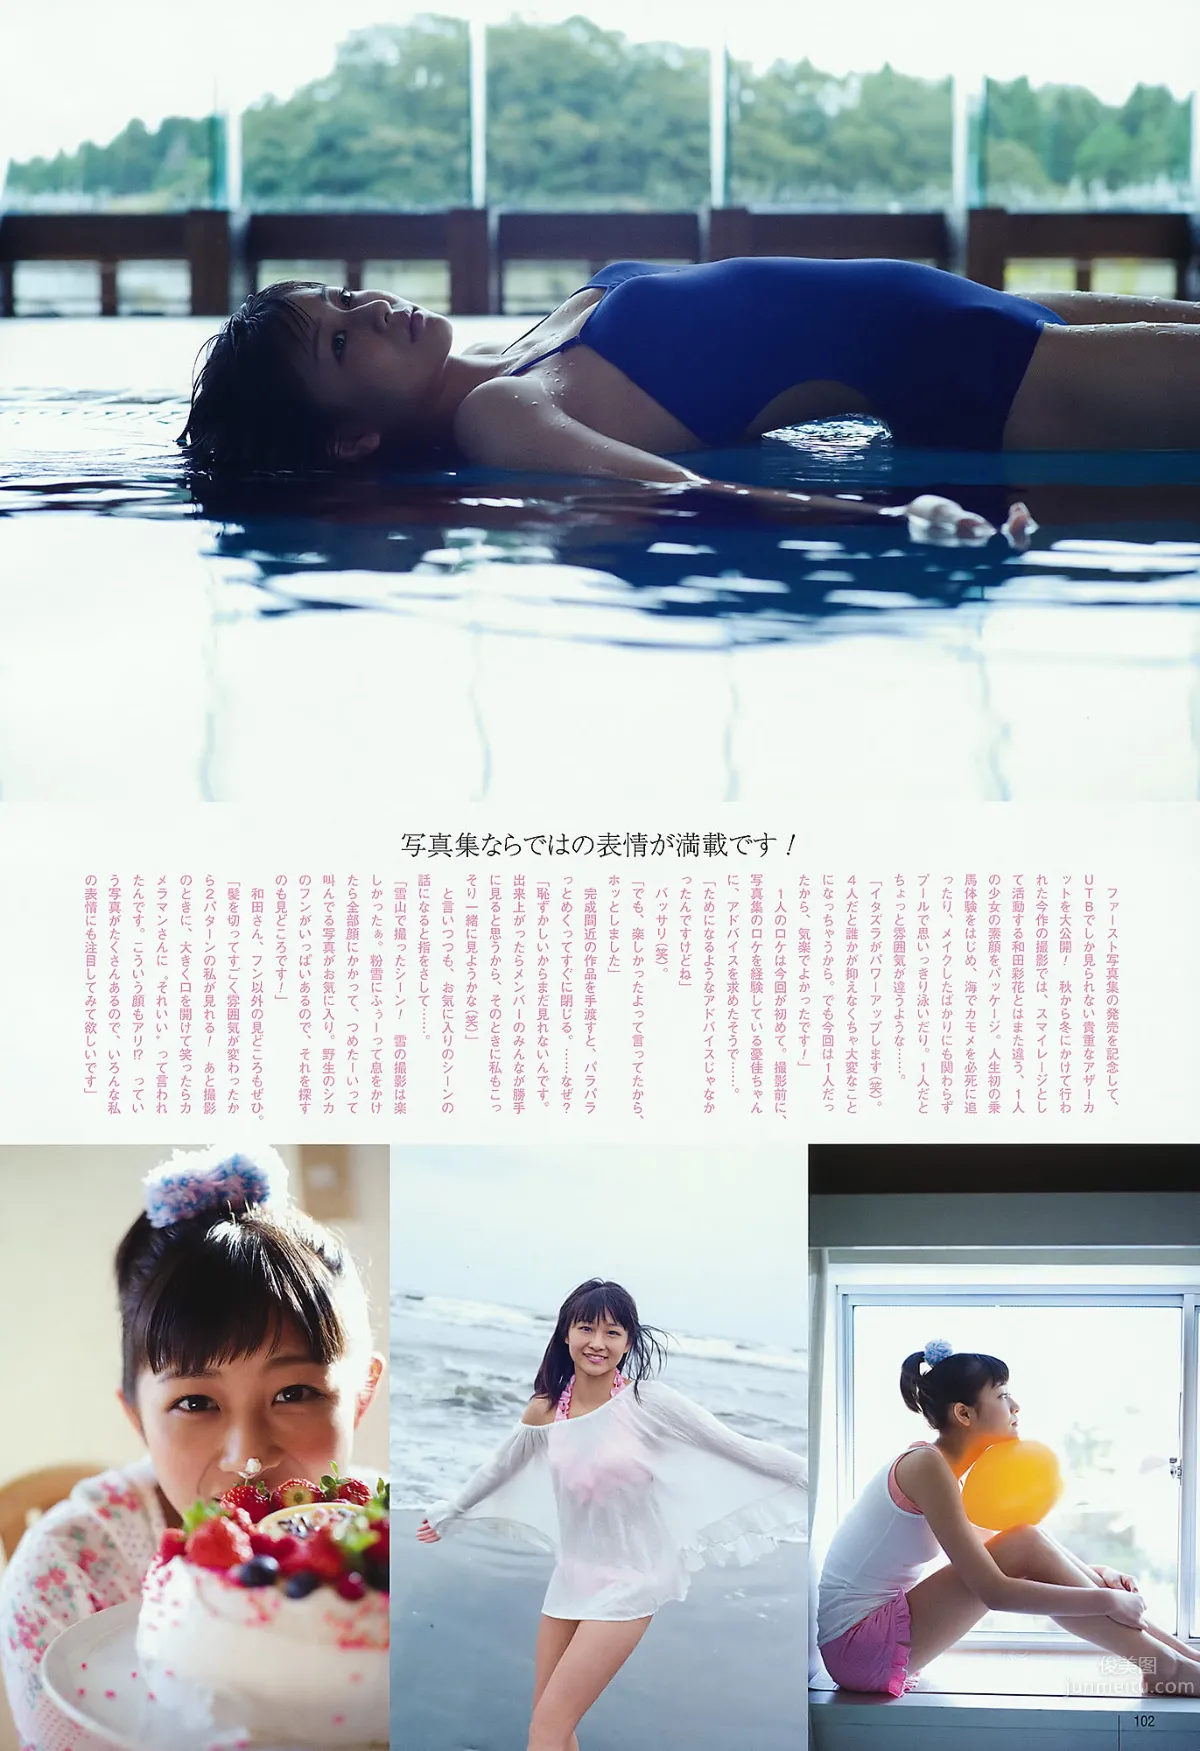 [UTB] Vol.202 AKB48 鈴木愛理 bump.y 橋本愛 スマイレージ 逢沢りな 北乃きい 真野恵里菜 [93P]_76